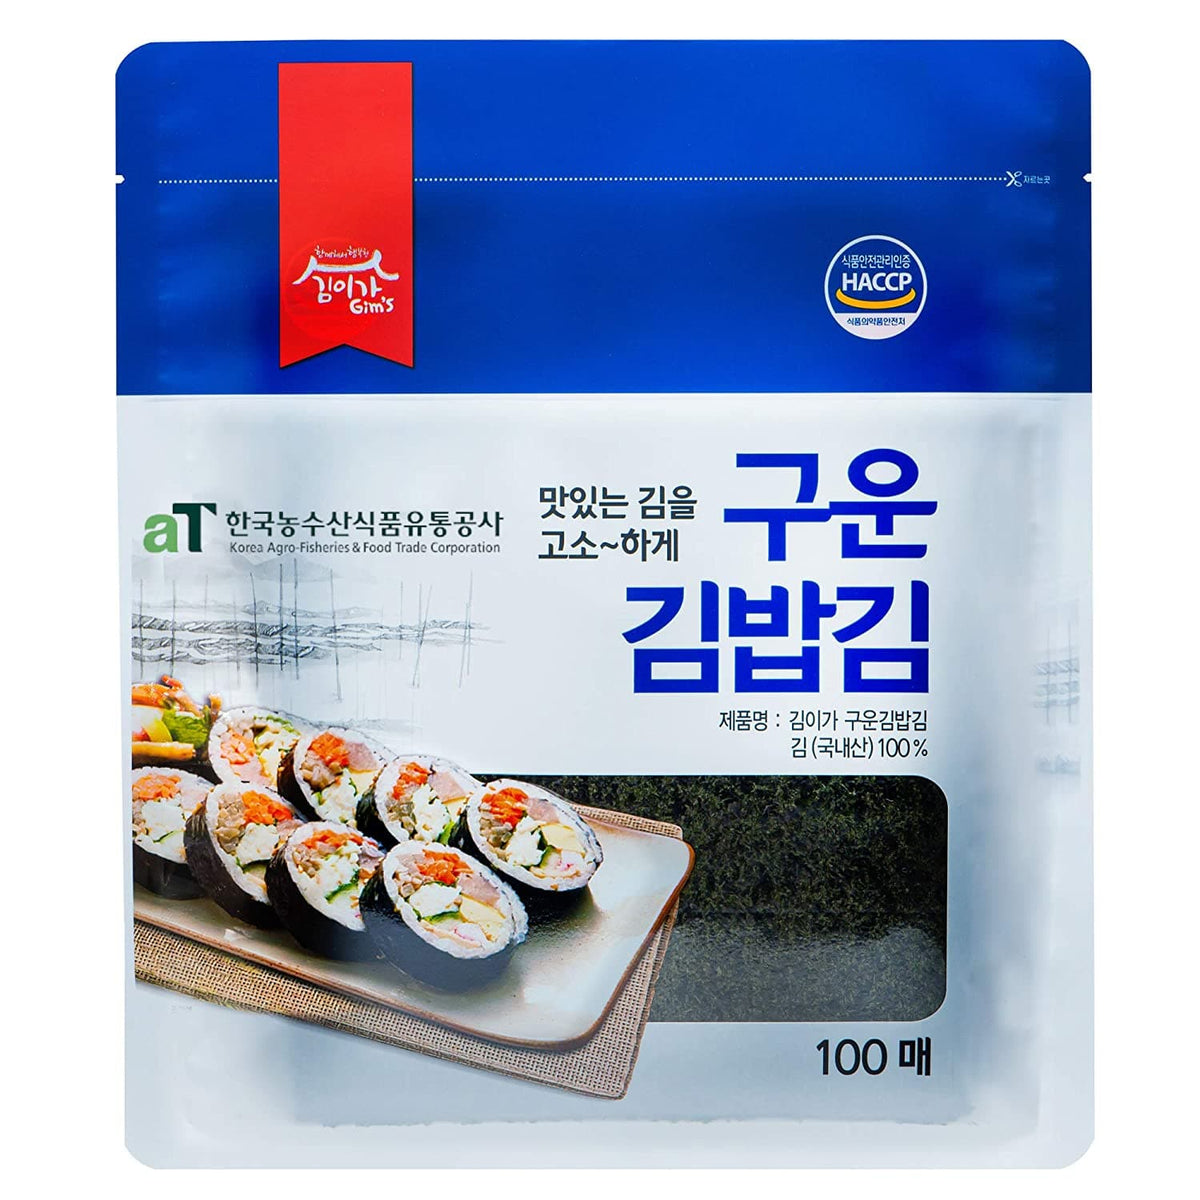 [SUNIL PRODUCTS CO., LTD. Corporation] Delicious Premium Kimbap Seaweed Sheets (100 Sheets)